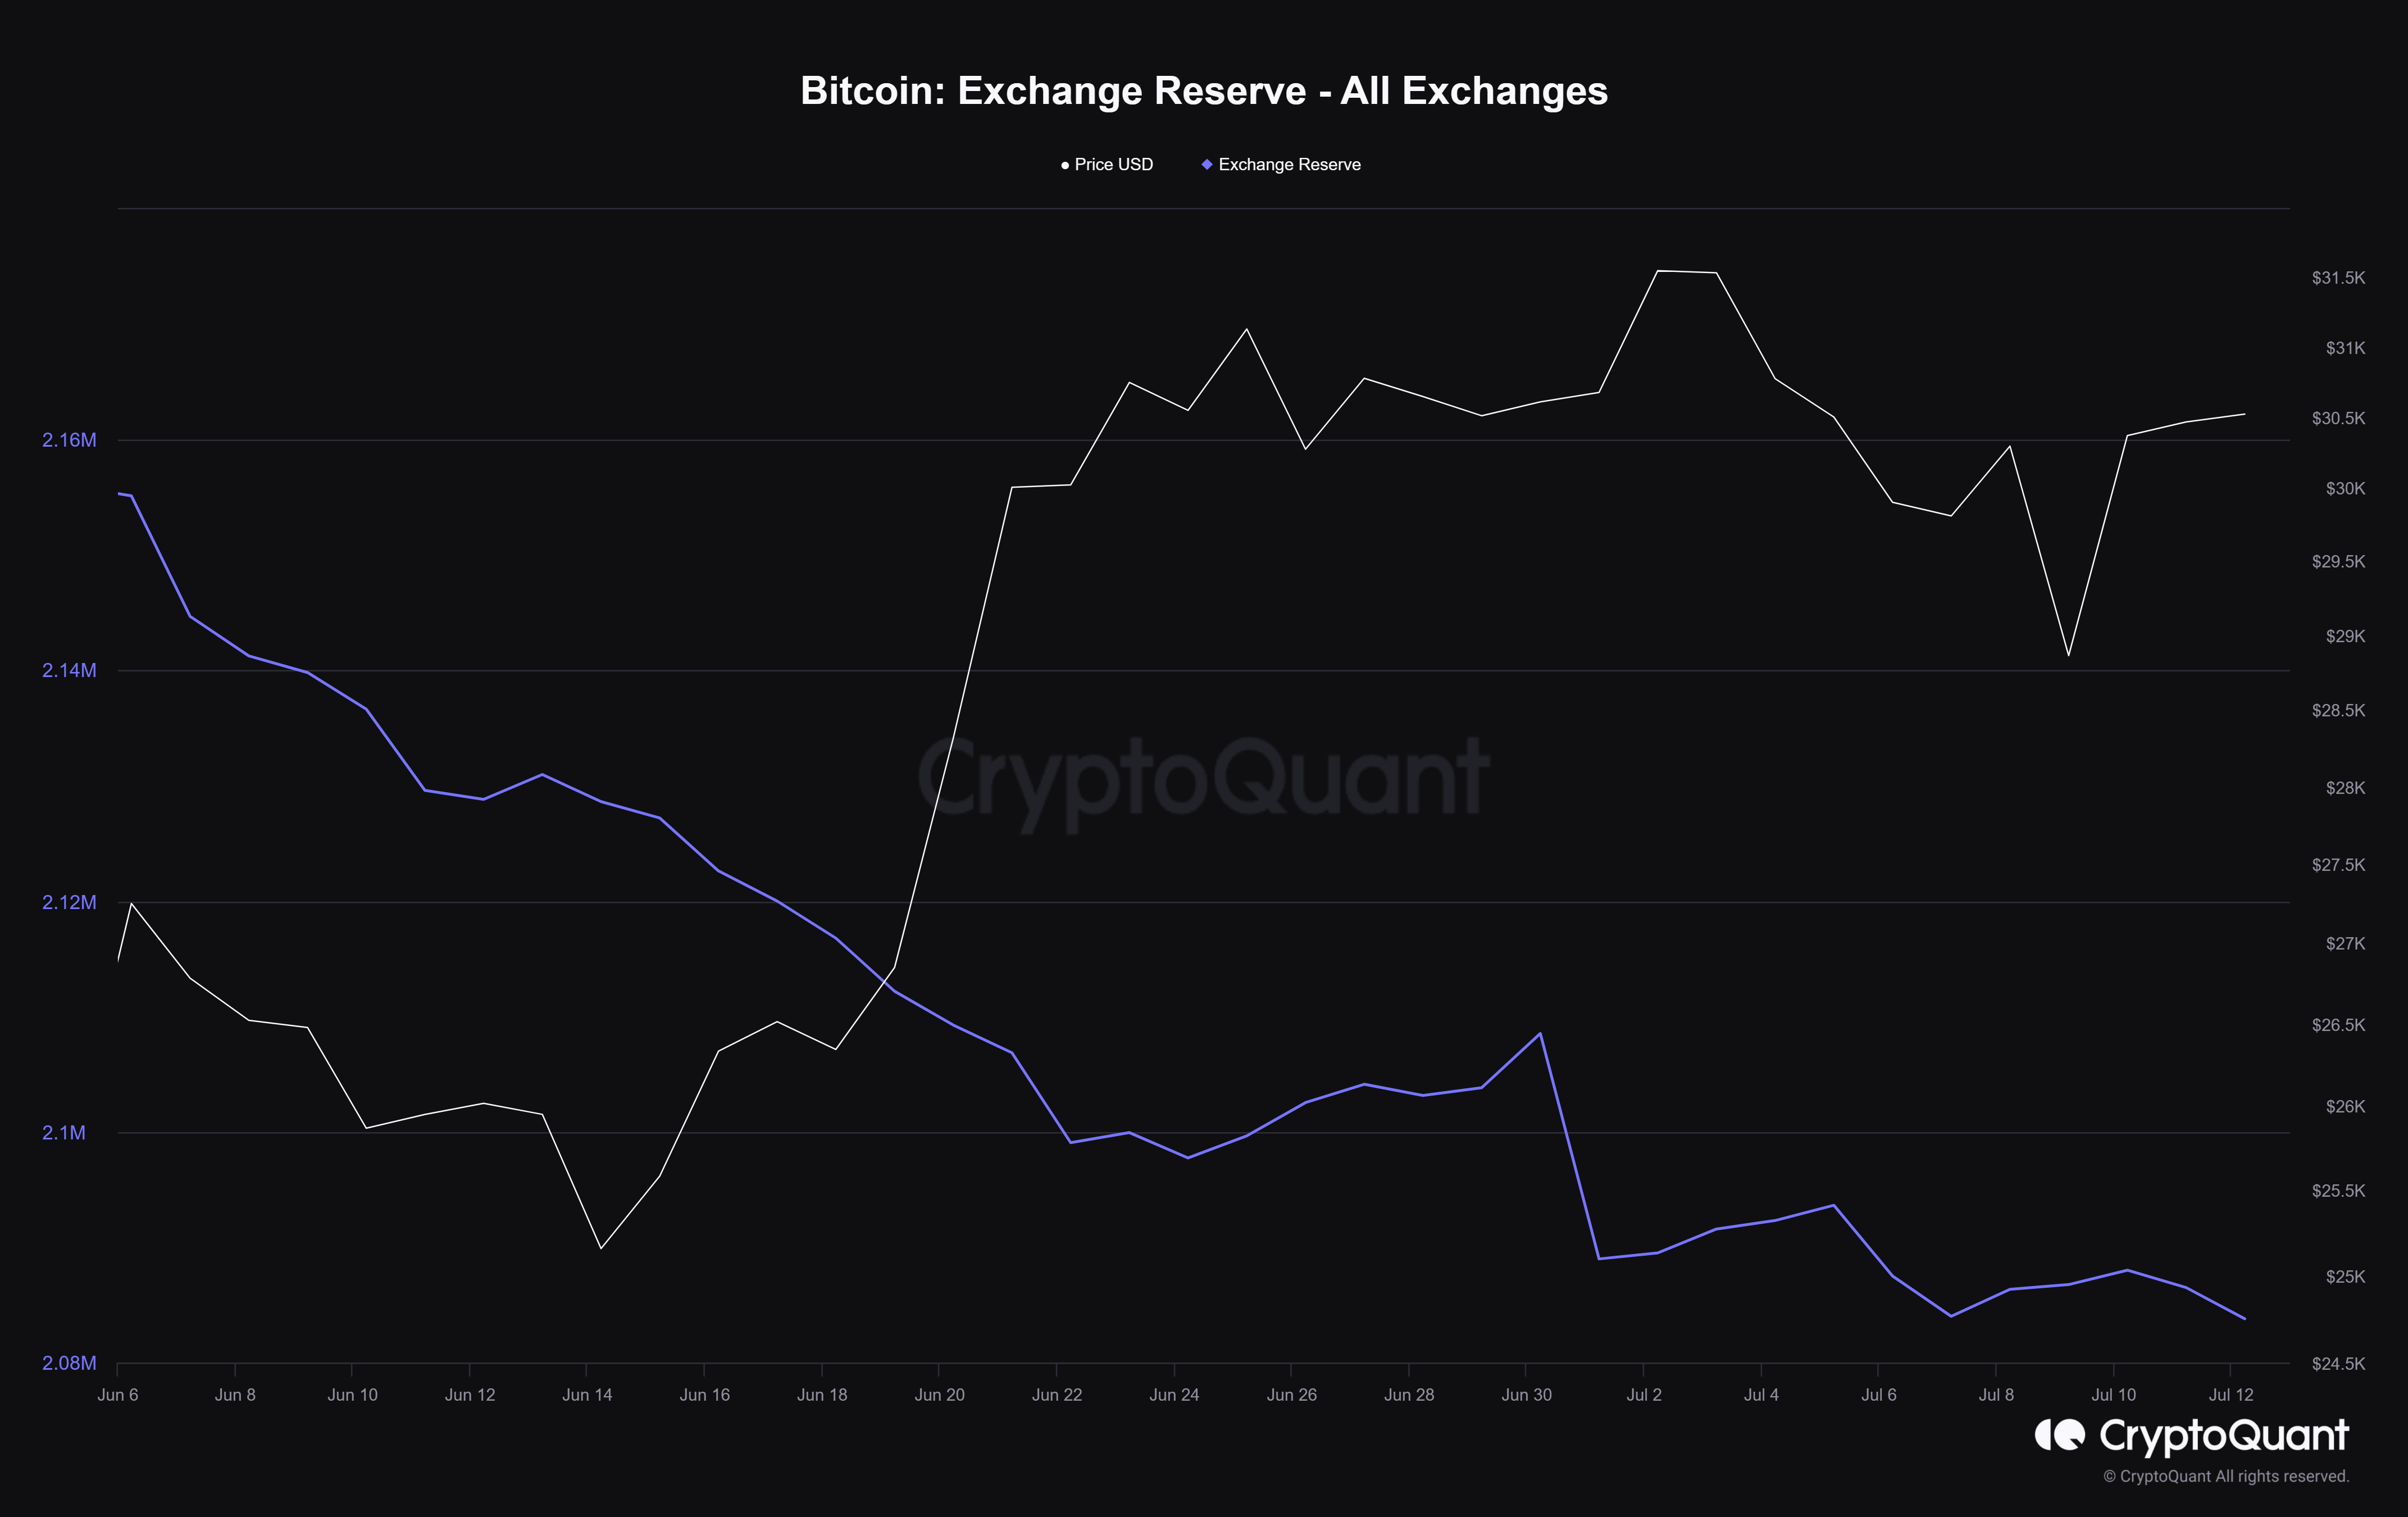 Bitcoin exchange reserves